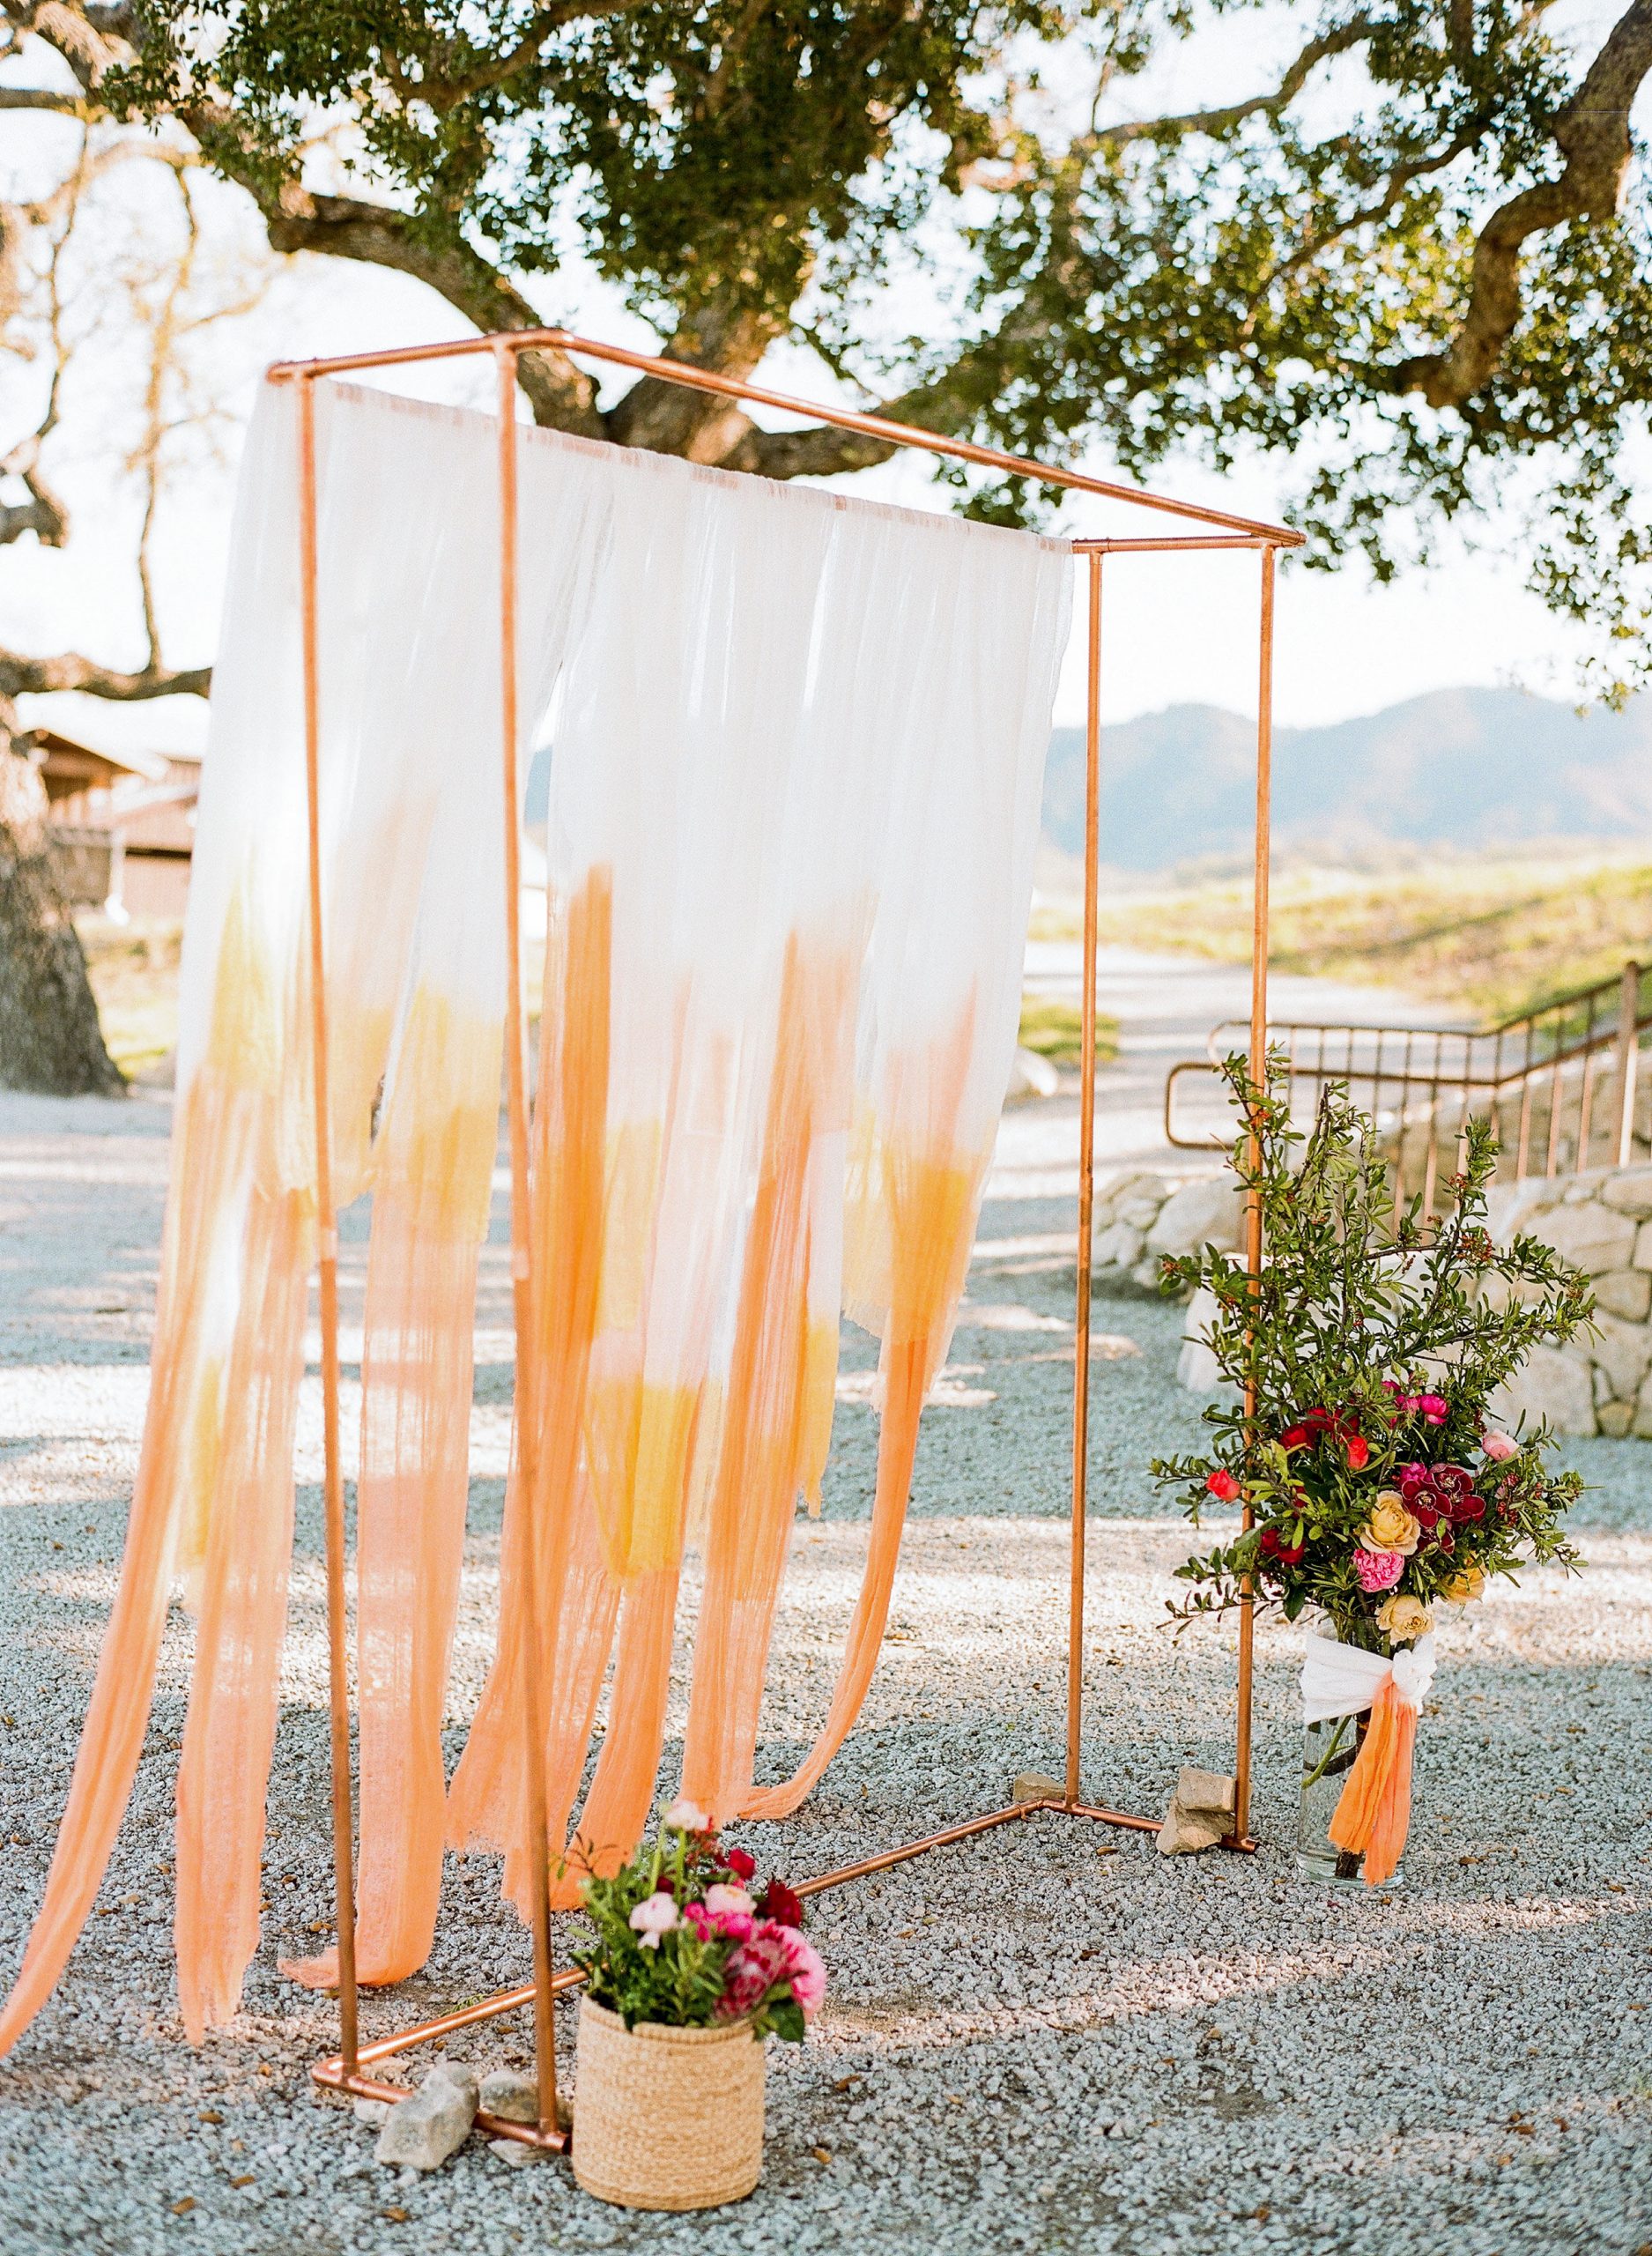 Wedding Backdrop Ideas We Love